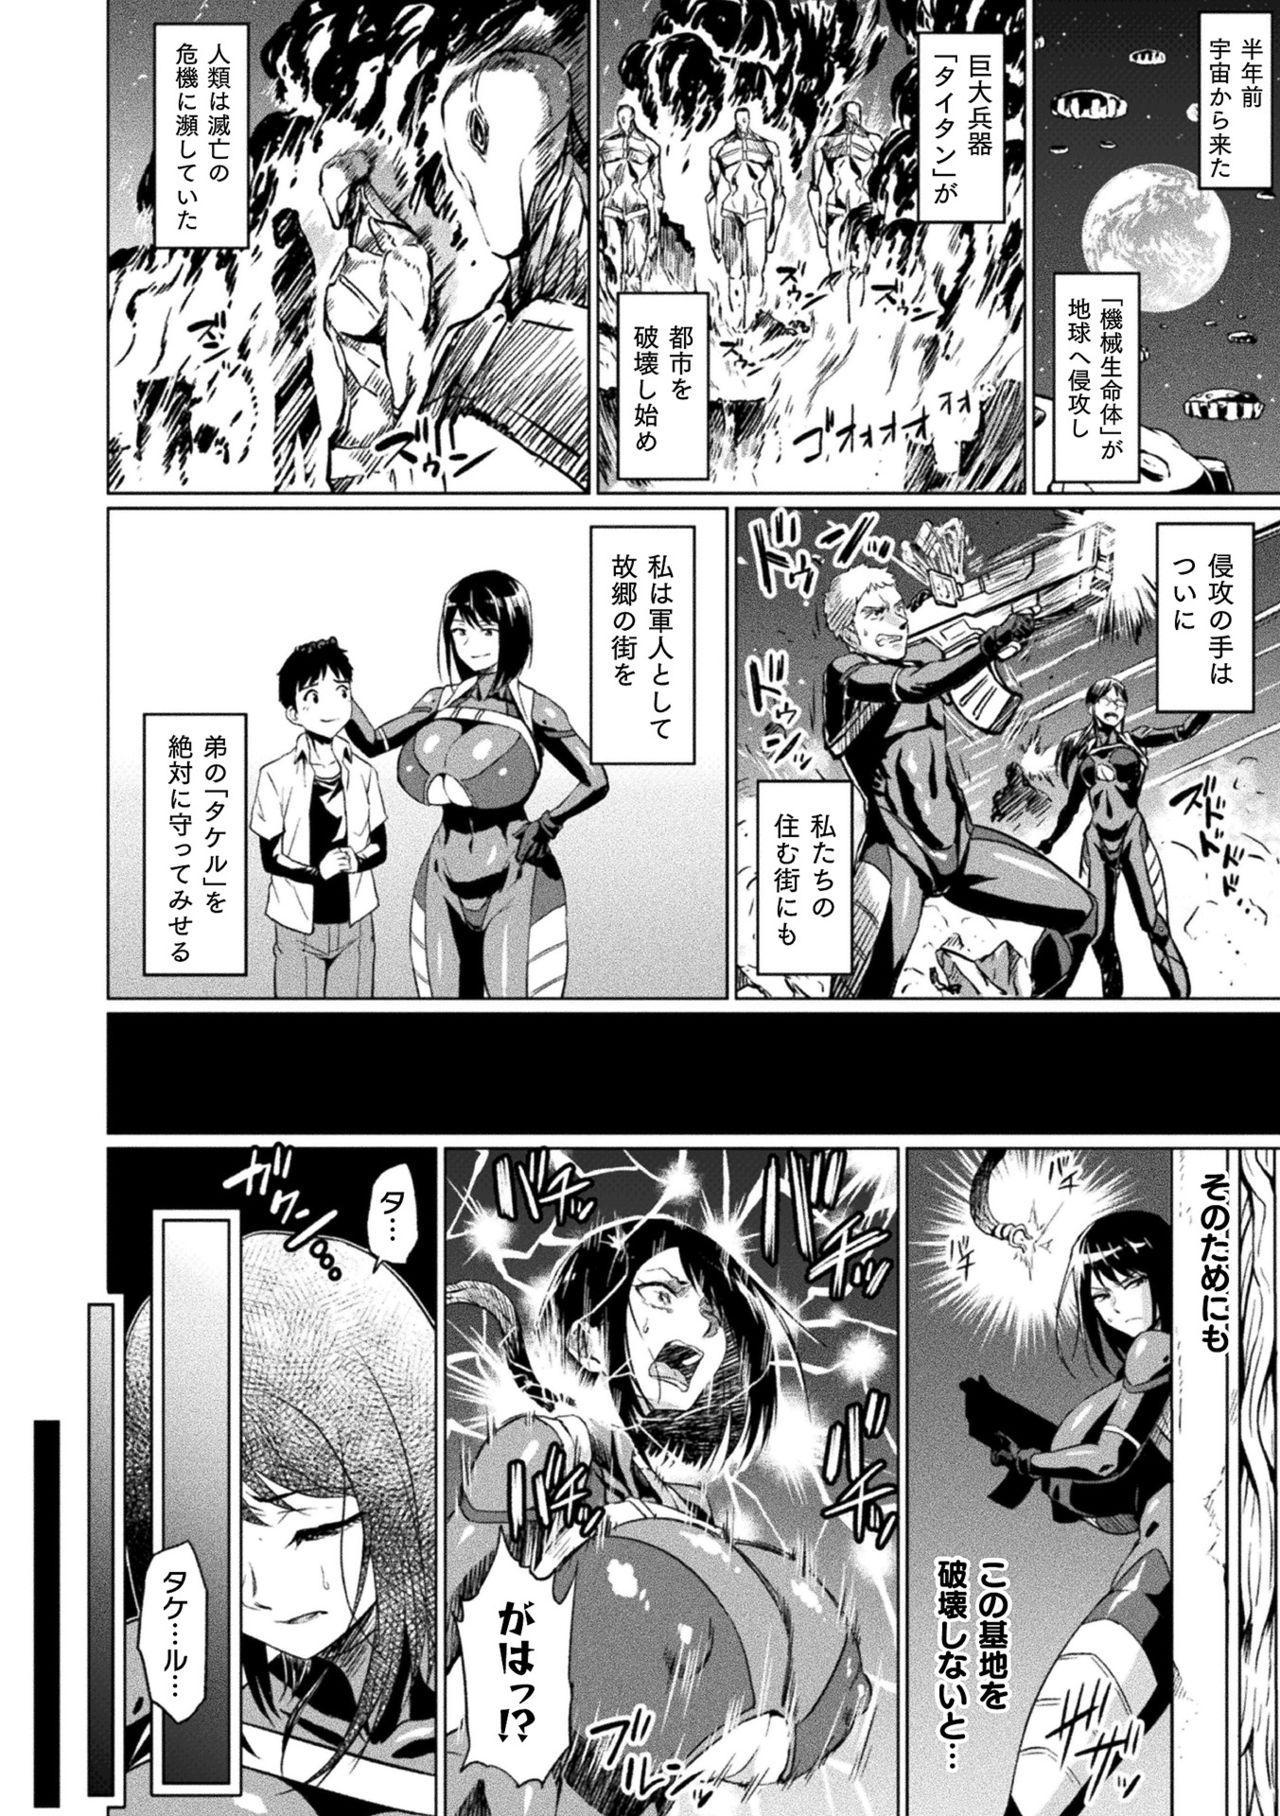 Piss 2D Comic Magazine - Seitai Unit Kikaikan Vol.1 Transsexual - Page 4